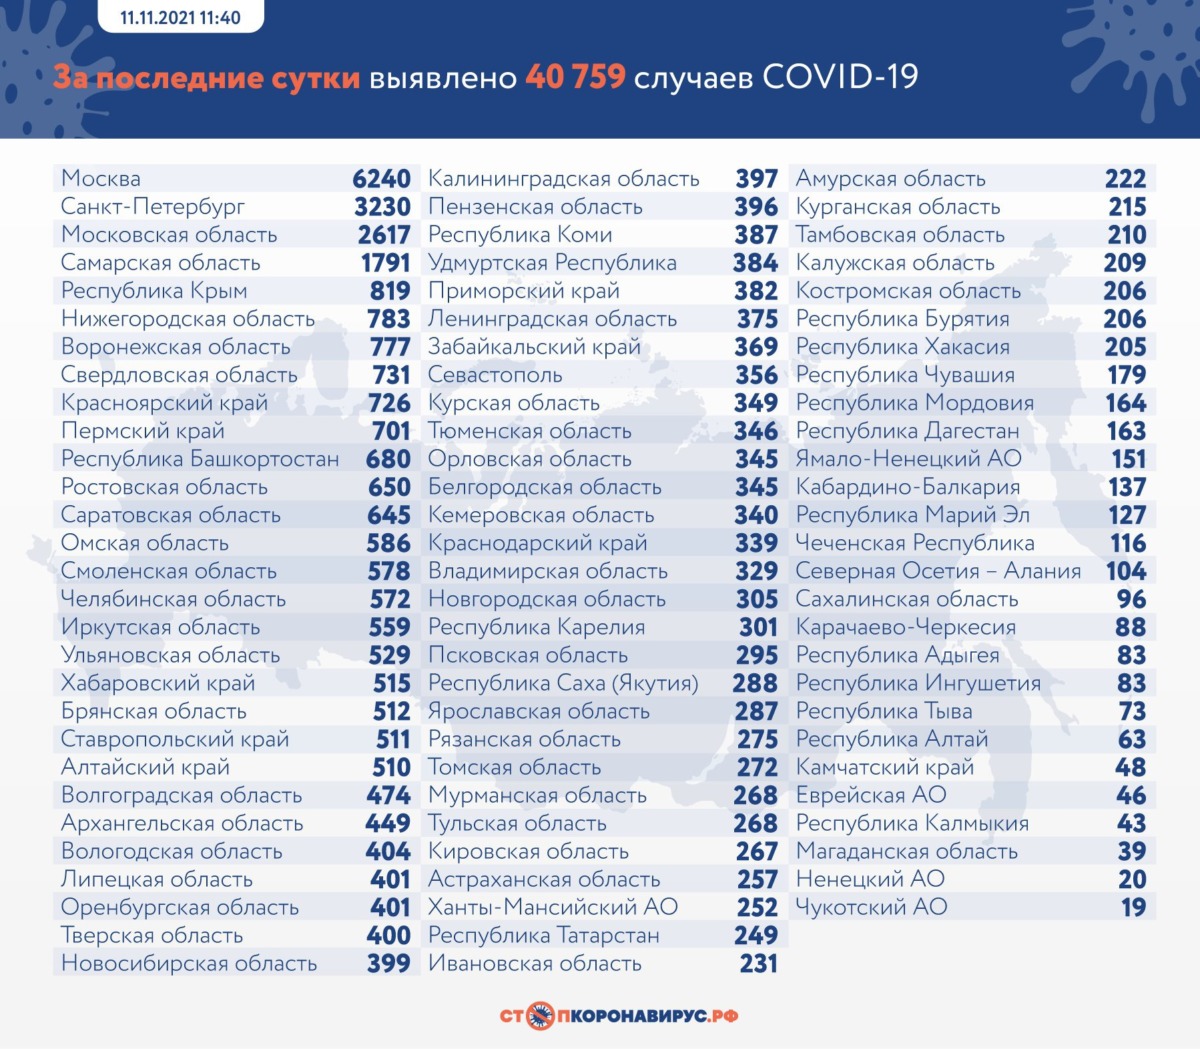 Статистика коронавируса в России на 11 ноября